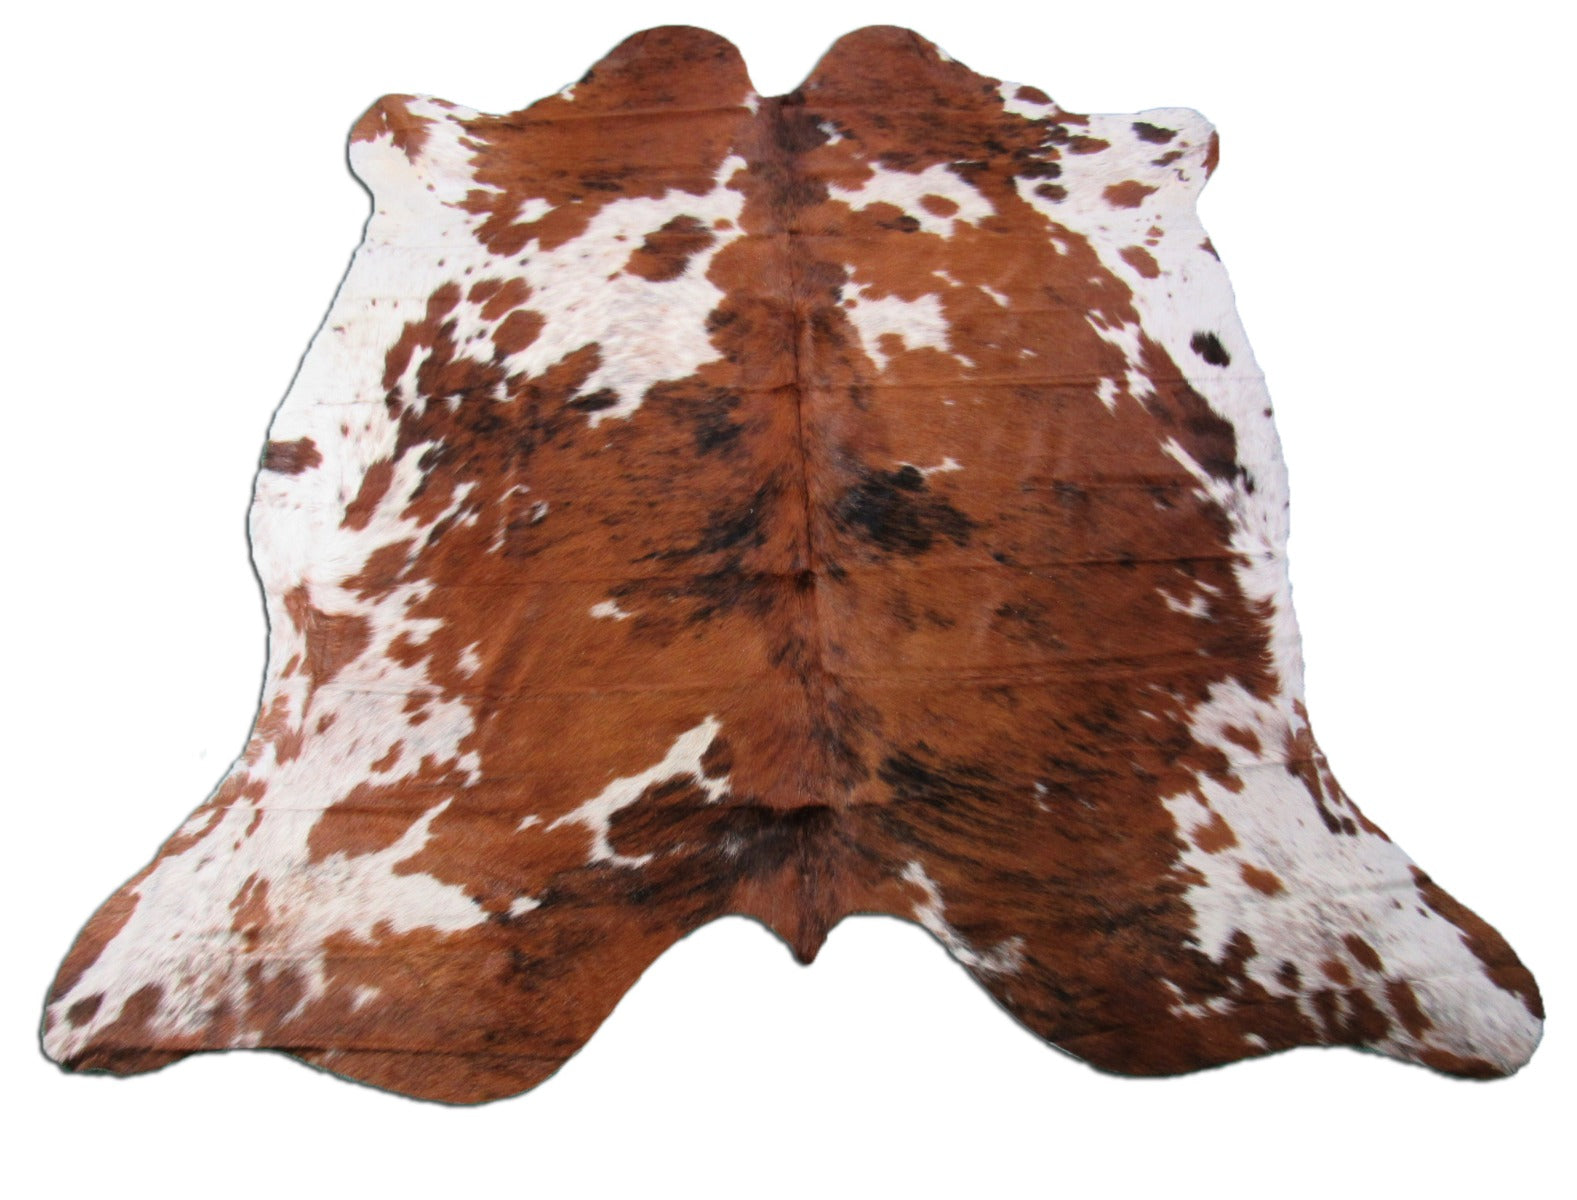 Speckled Tricolor Cowhide Rug (lighter tones) - Size: 6.7x6.5 feet M-1351